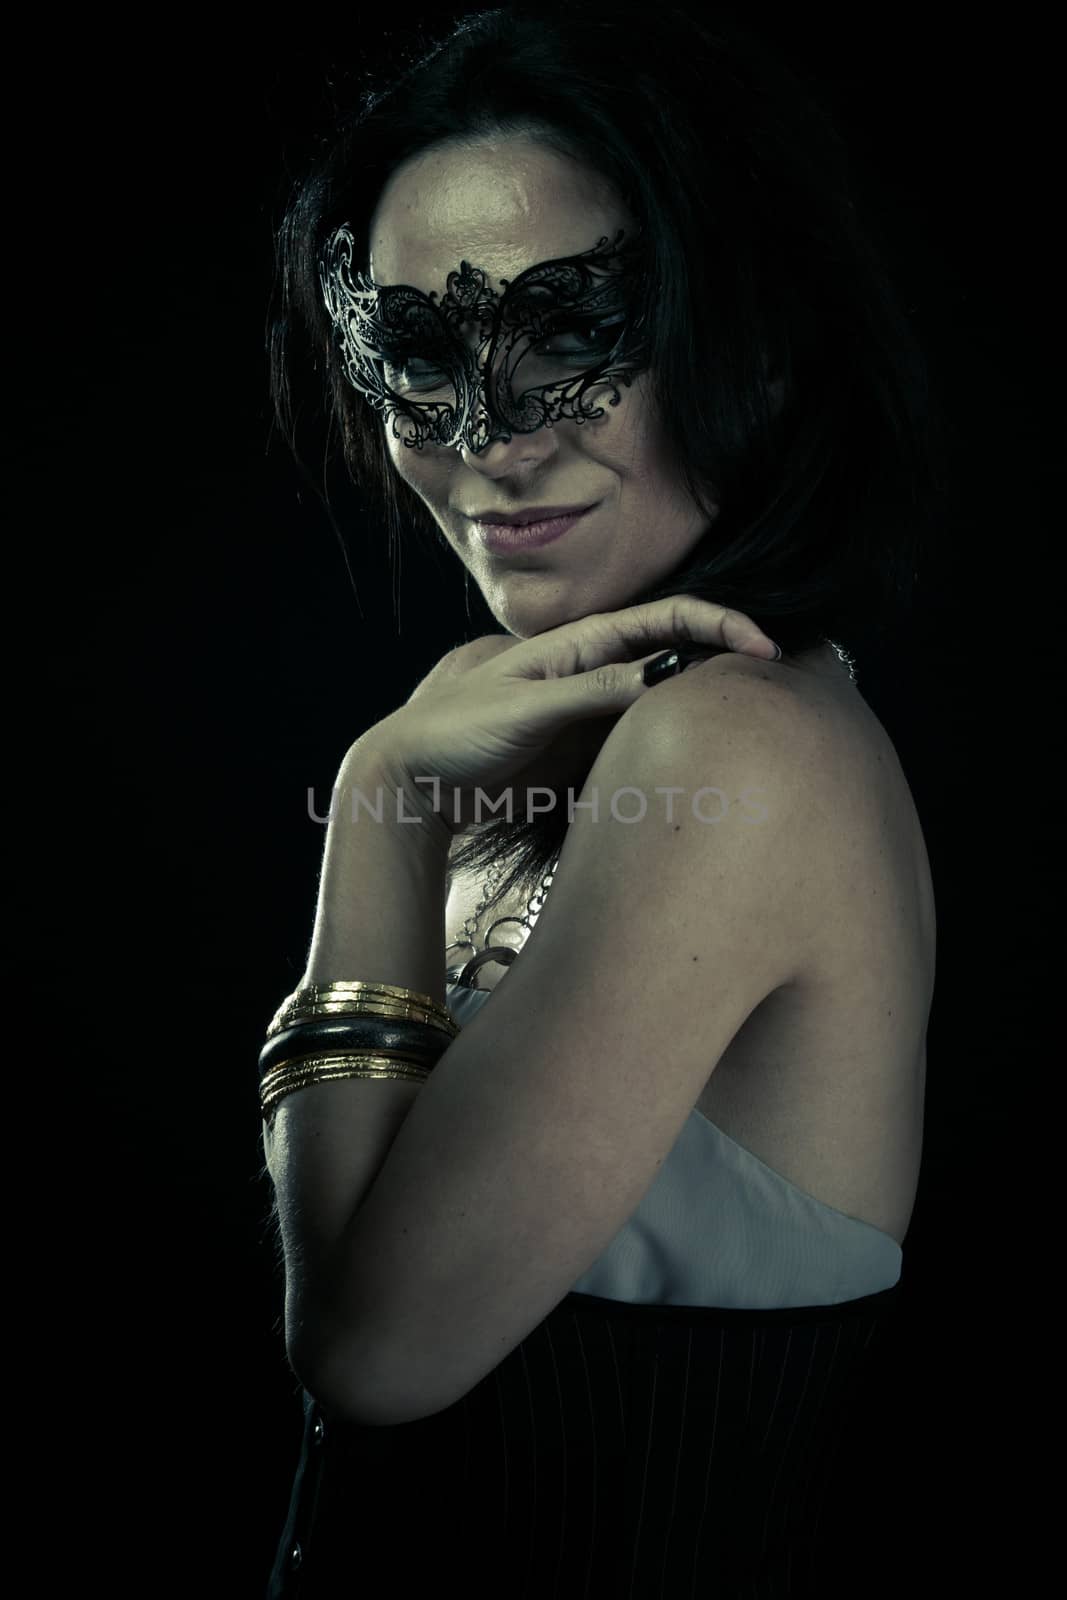 Tribal.Beautiful young woman in mysterious black Venetian mask. Fashion photo. tribal design.